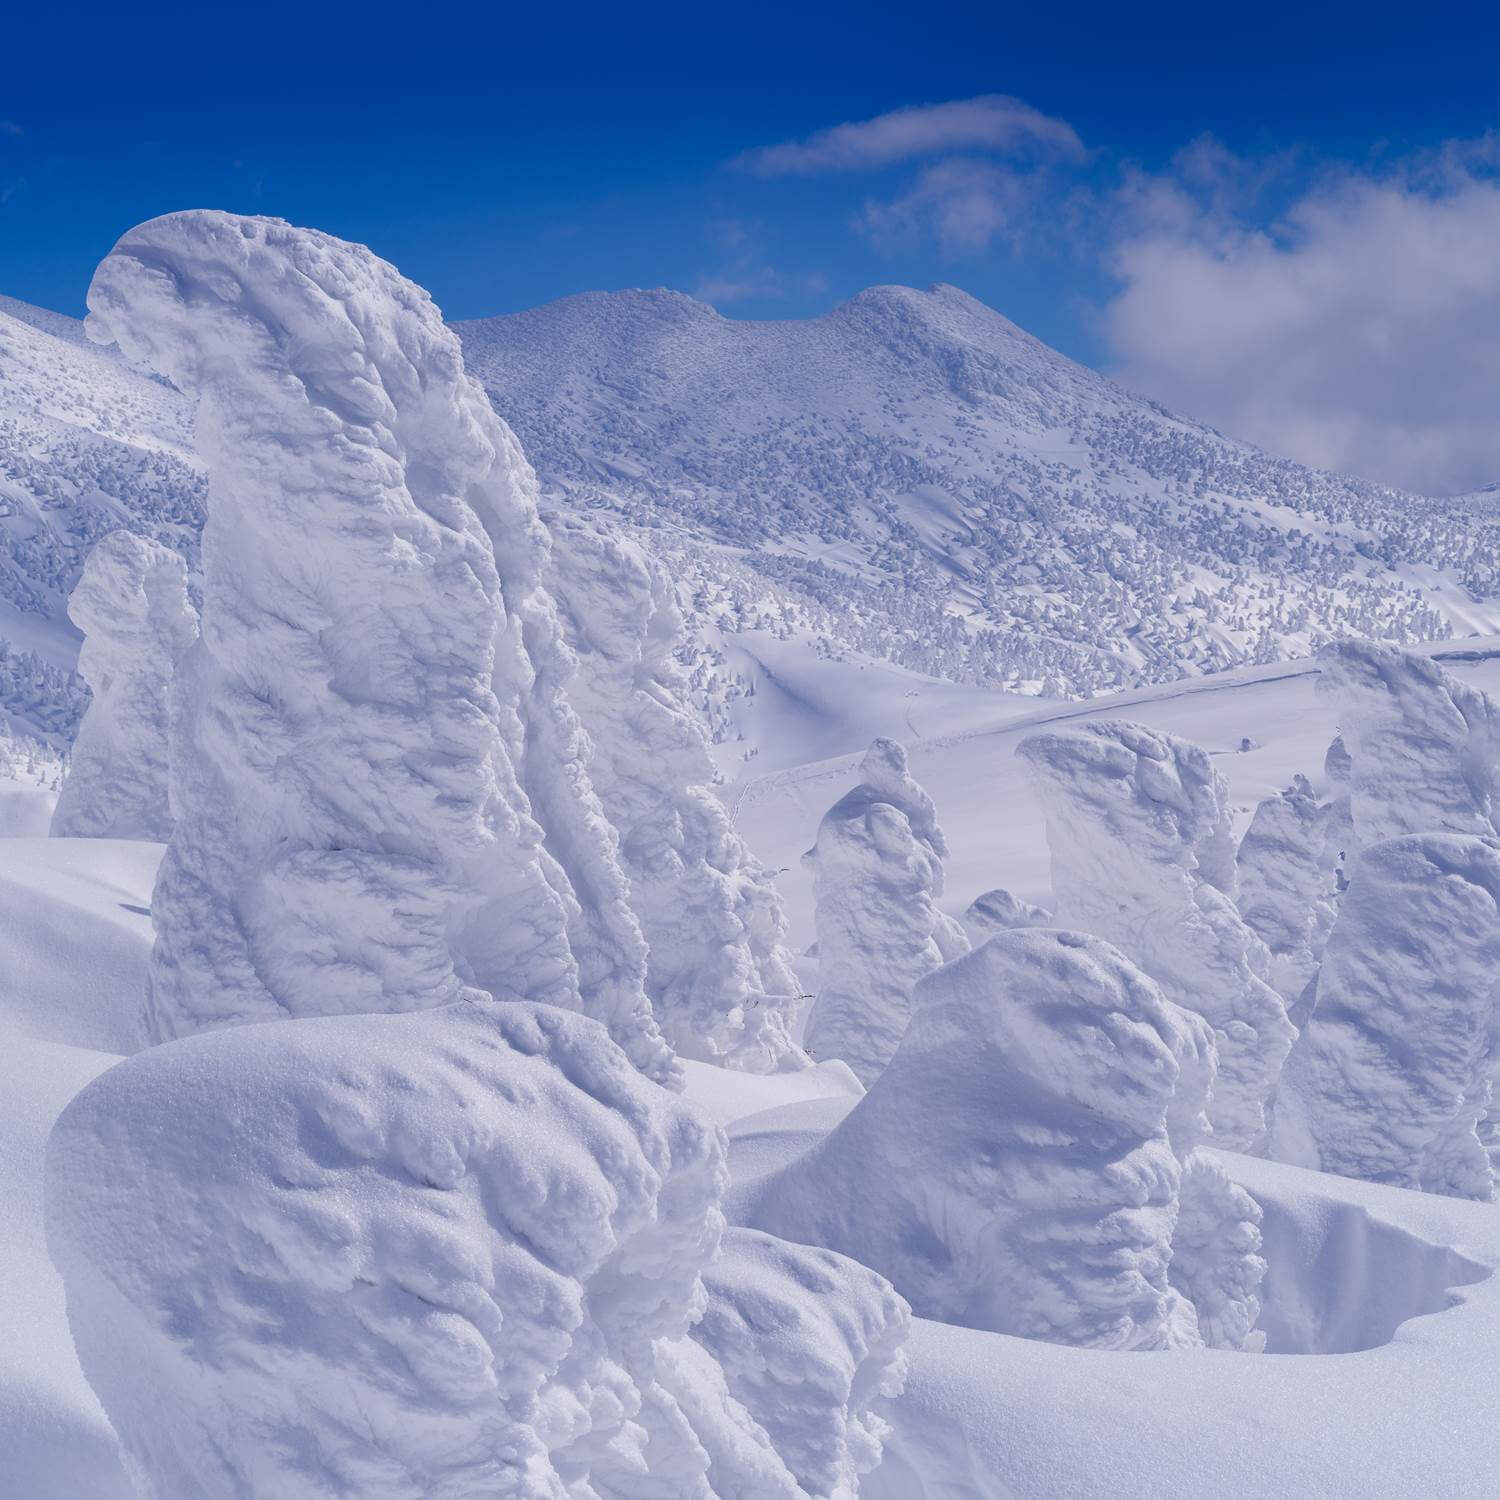 Hakkoda mountain in heavy snowfall, Aomori Prefecture, Japan = Shutterstock 9